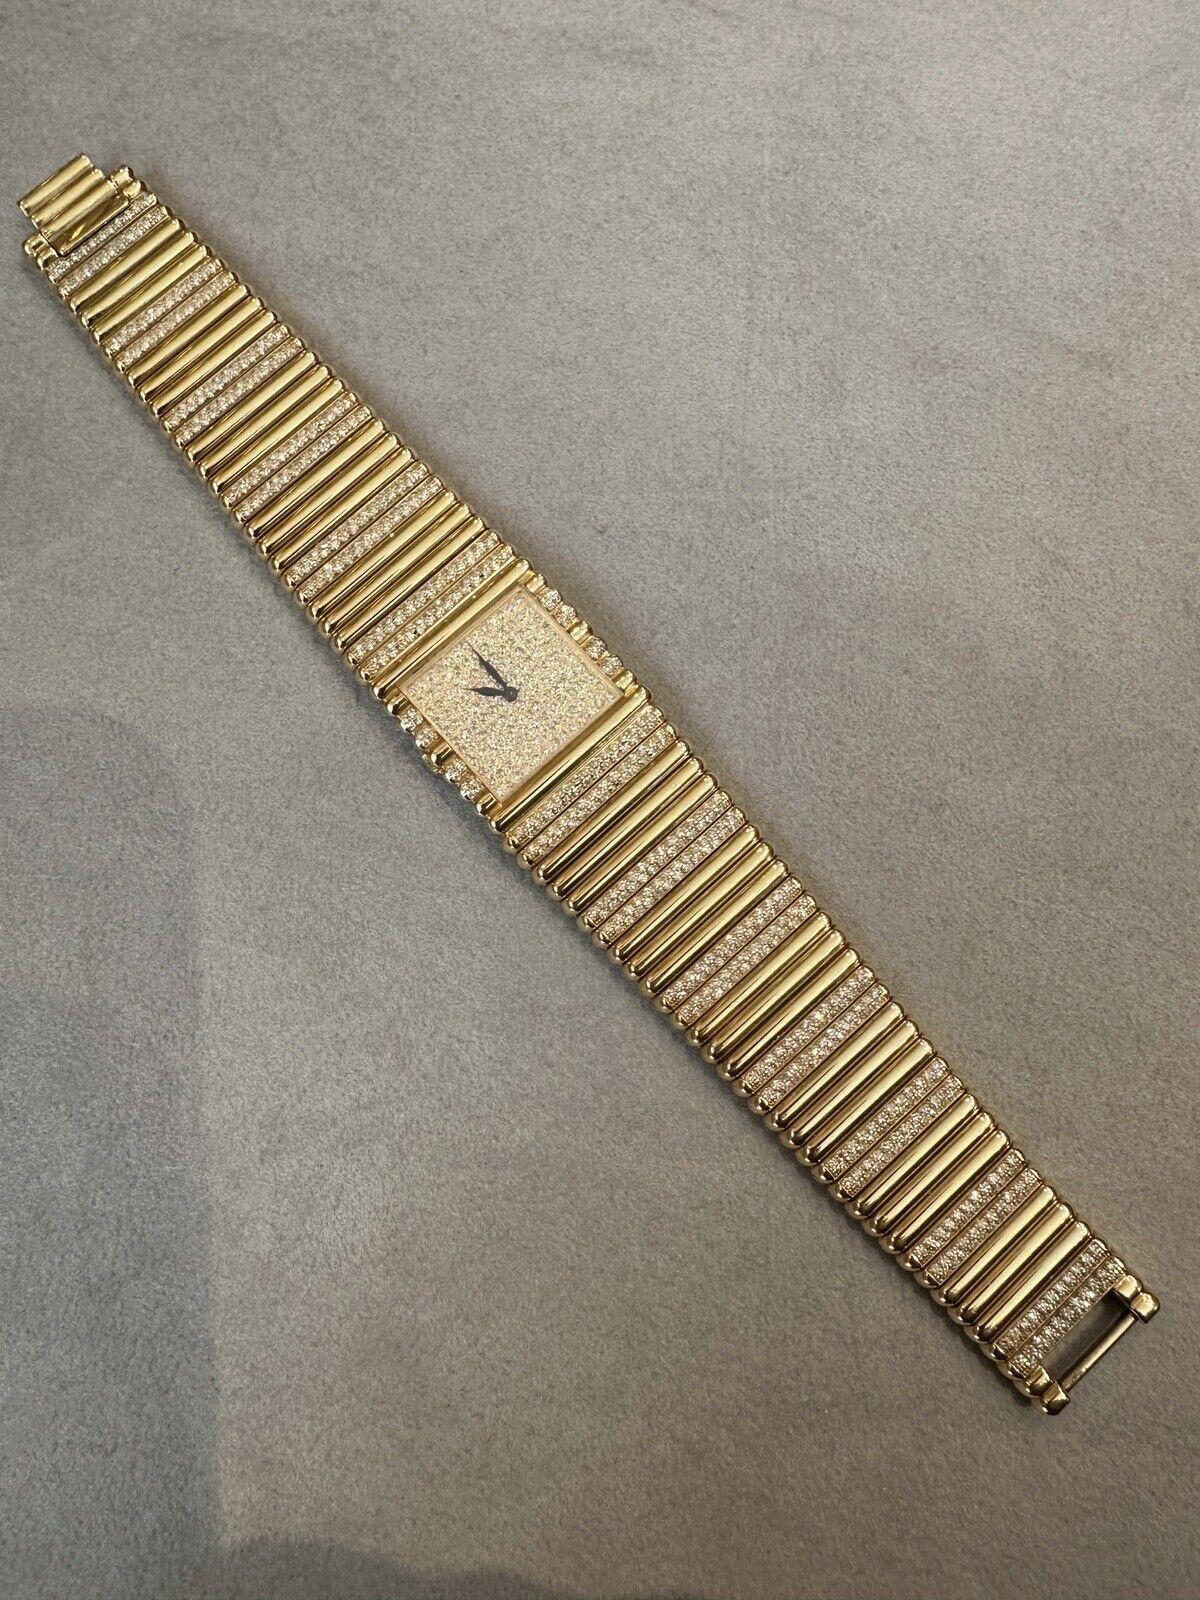 Piaget Emperador Factory Diamond and 18k Yellow Gold Watch 4